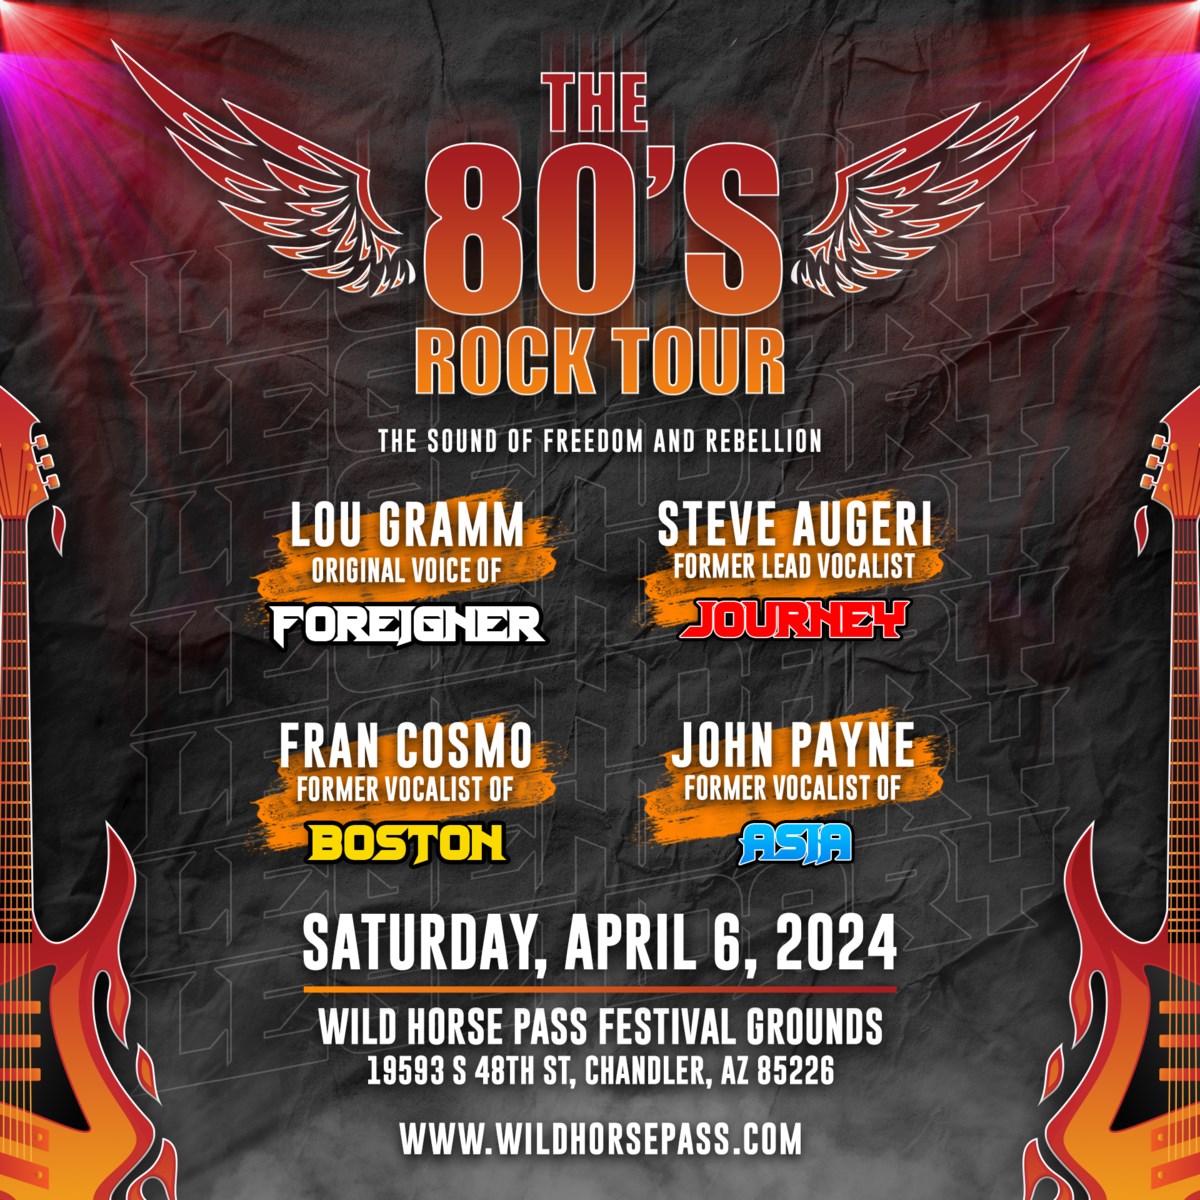 Legendary performers '80s Rock Tour set for April 6 